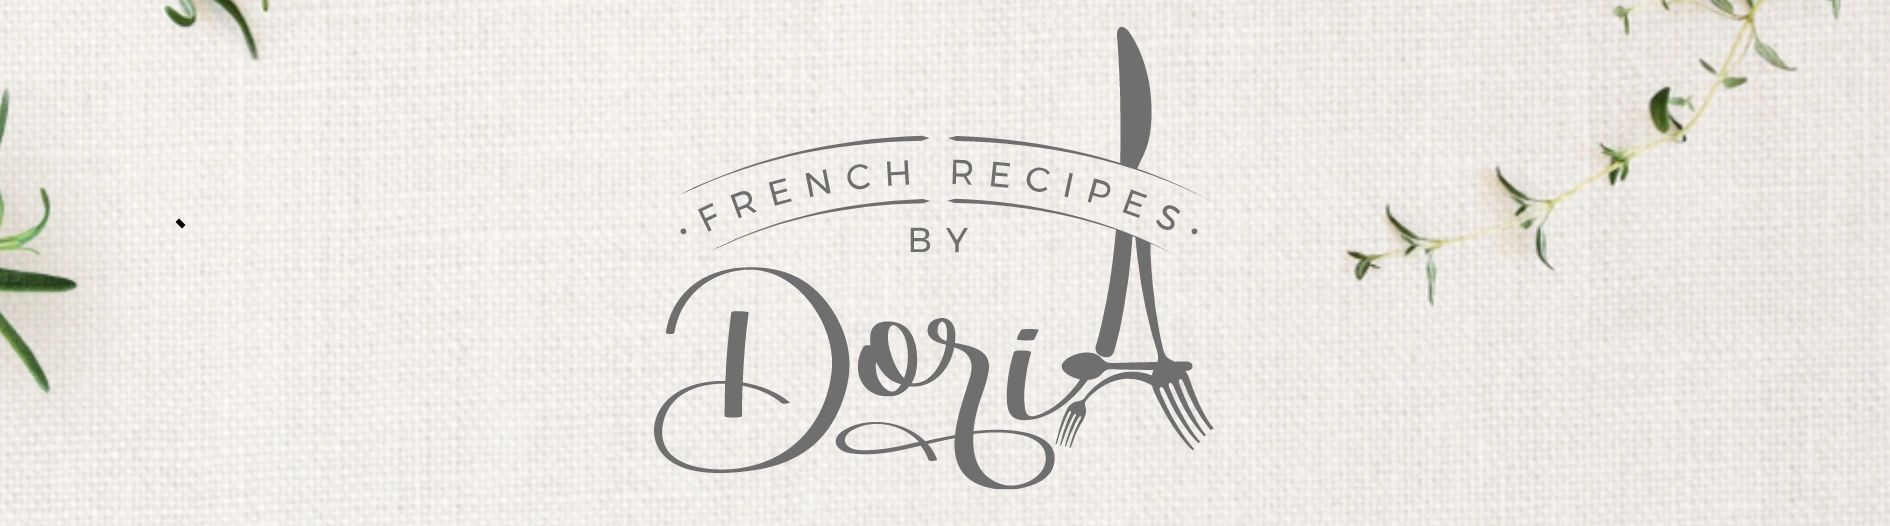 French Recipes by DoriA